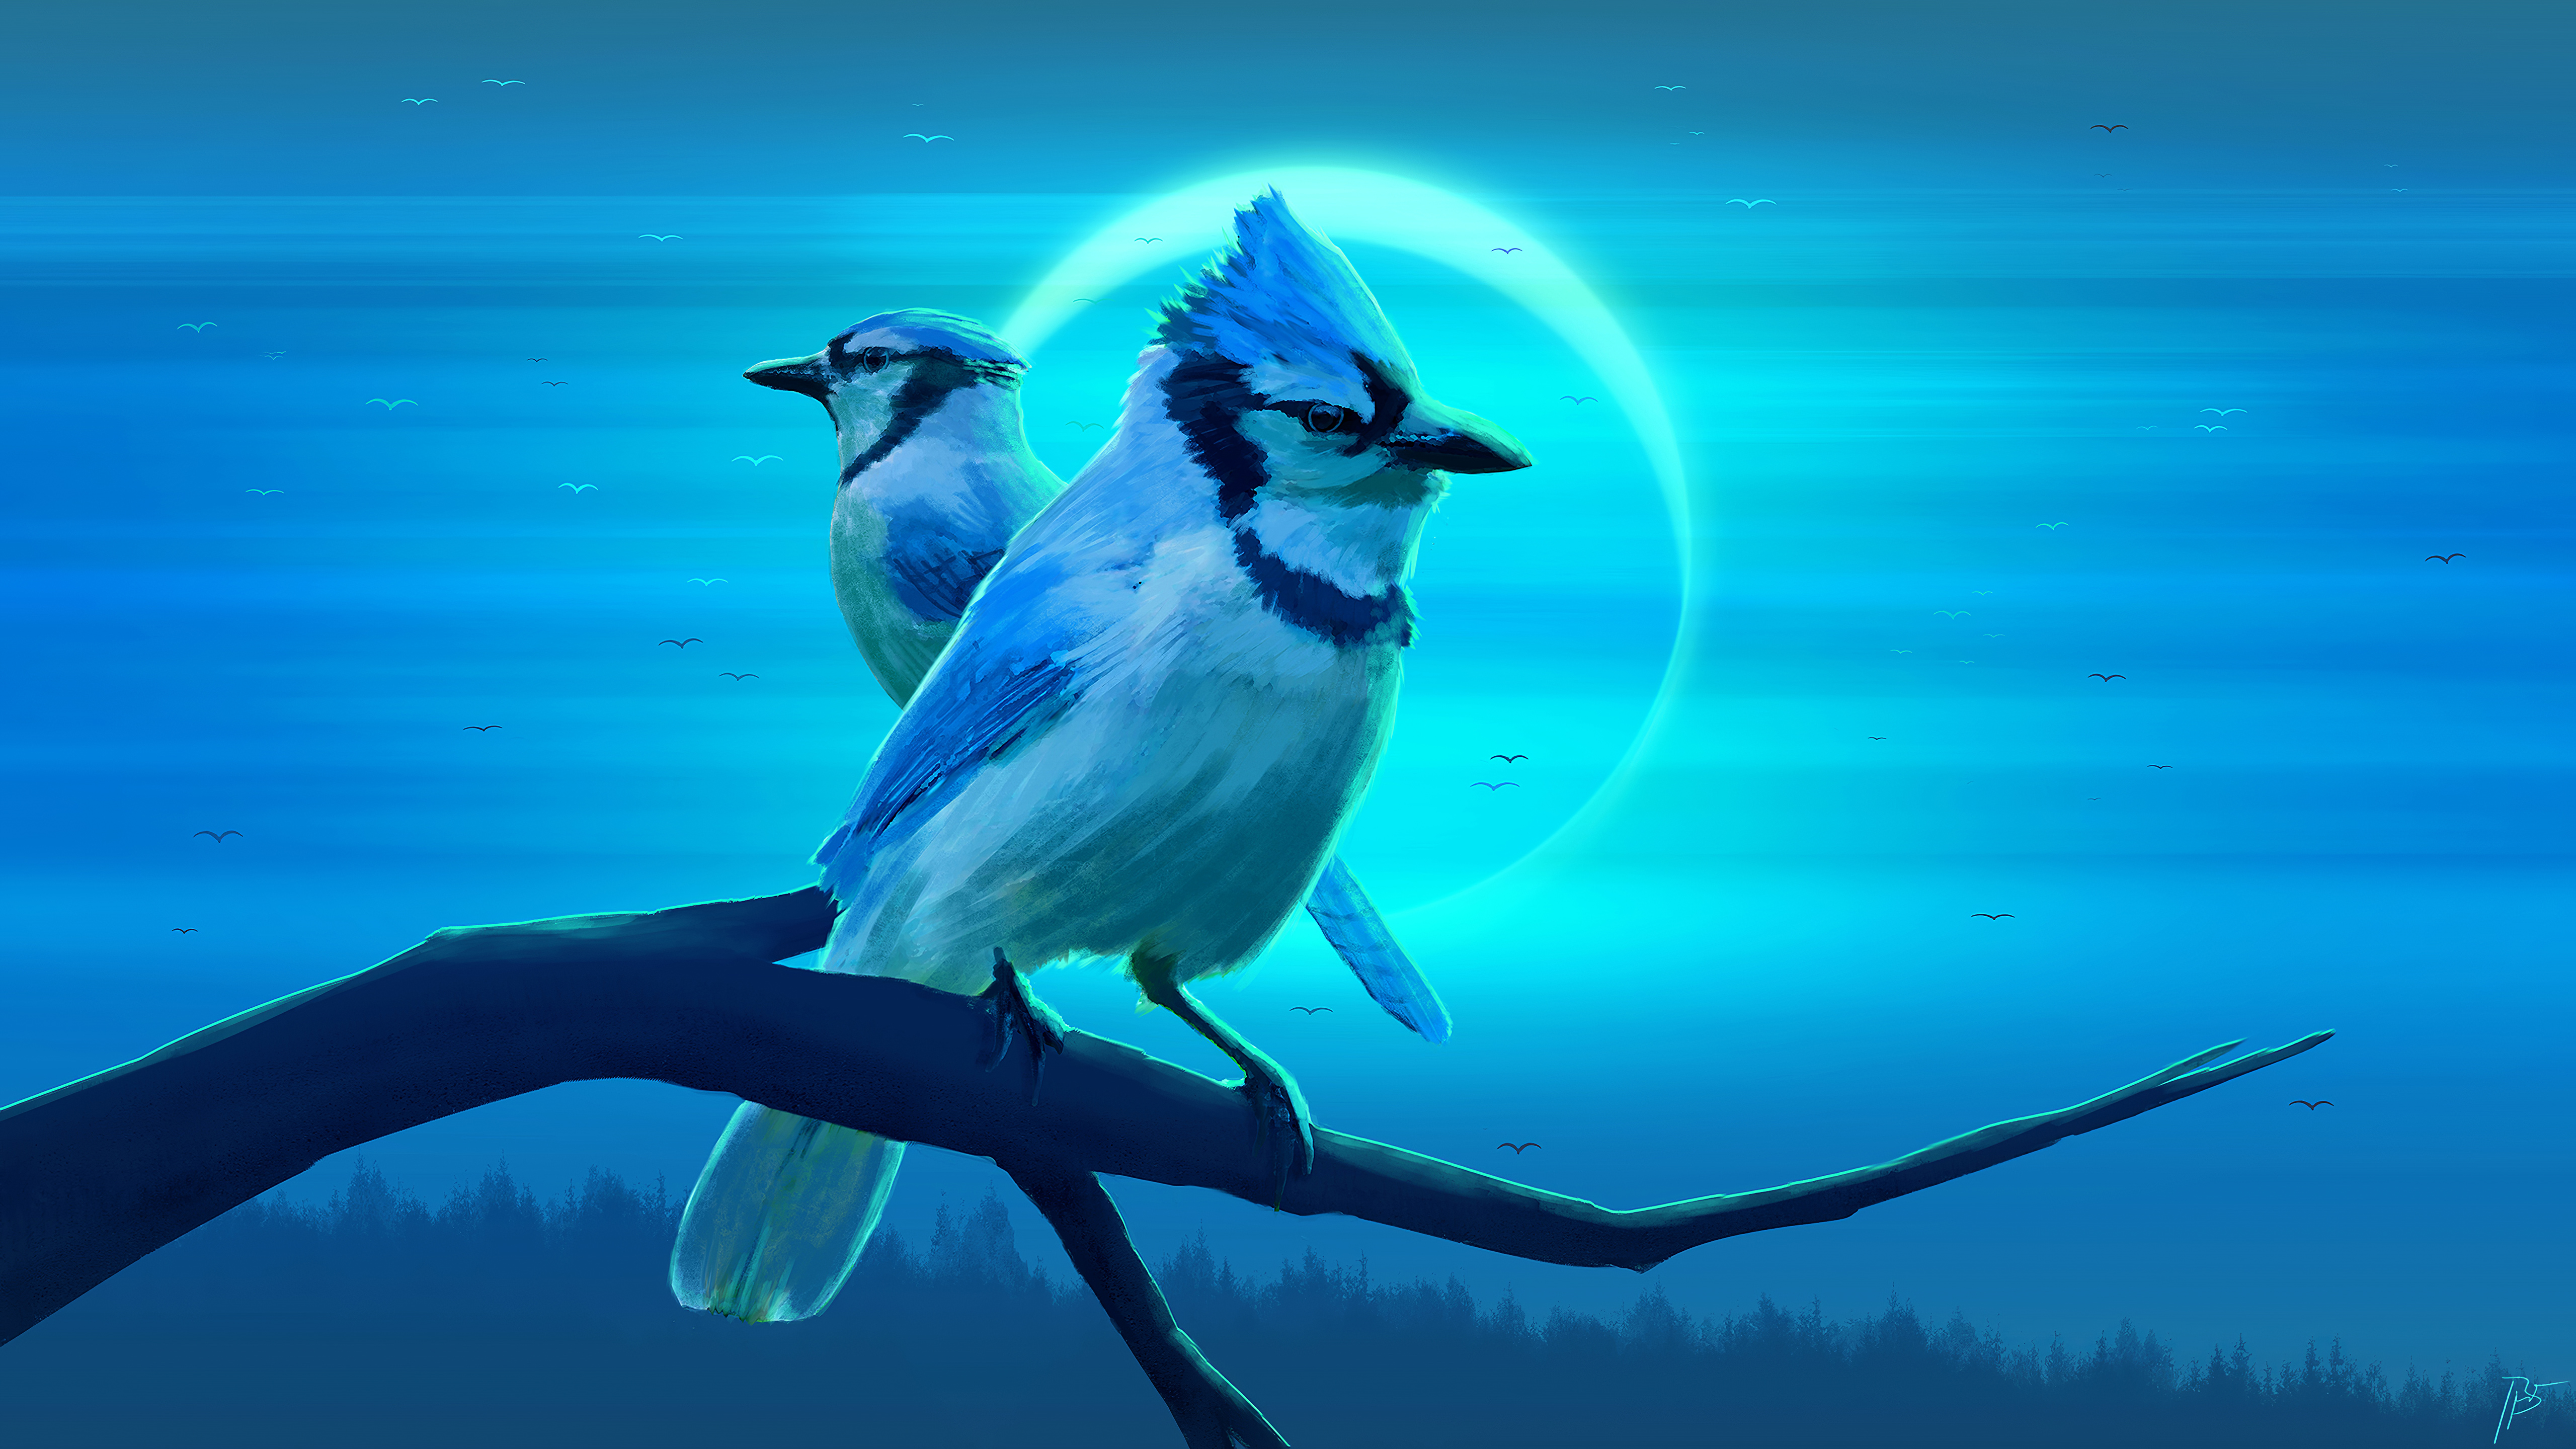 Download mobile wallpaper Birds, Bird, Animal, Blue Jay for free.